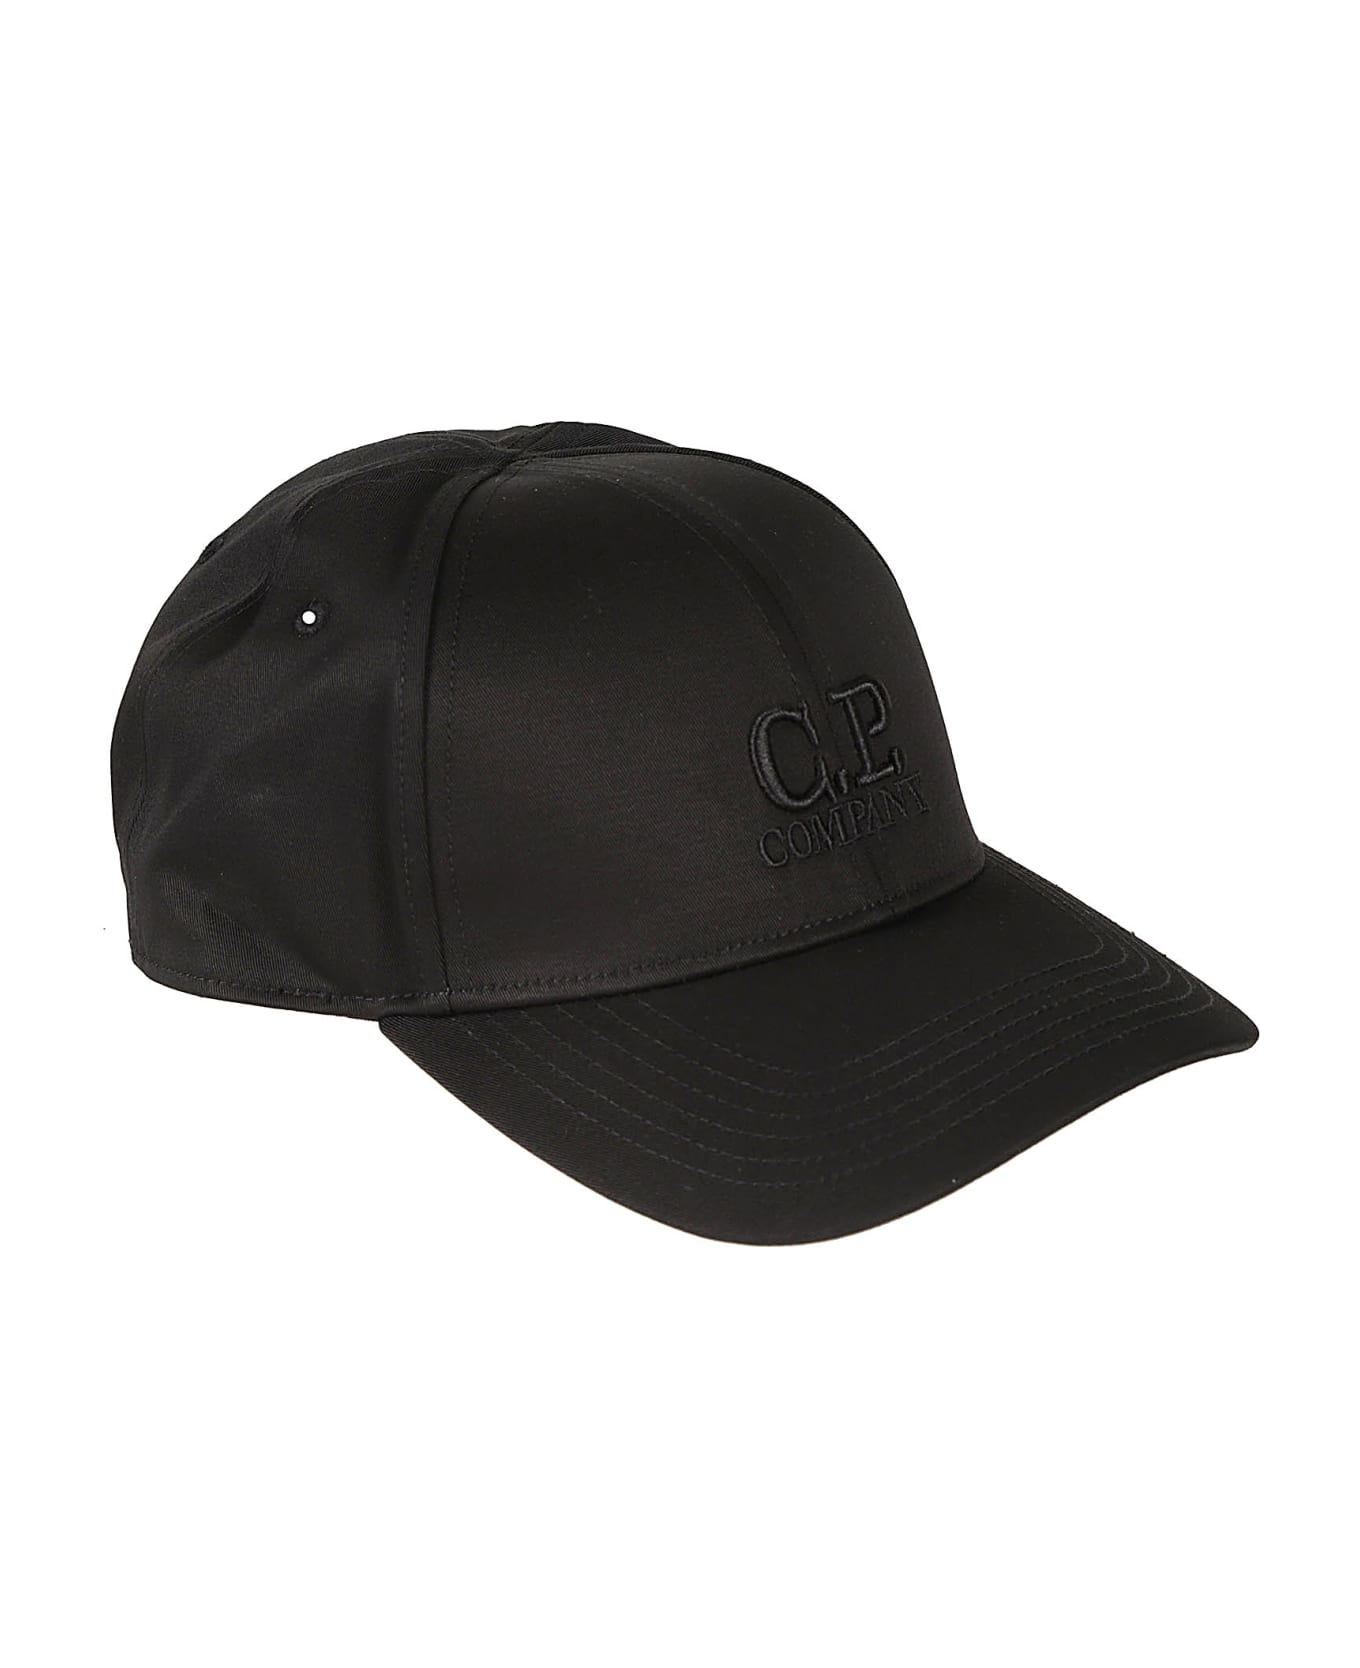 C.P. Company Gabardine Baseball Cap - Black 帽子